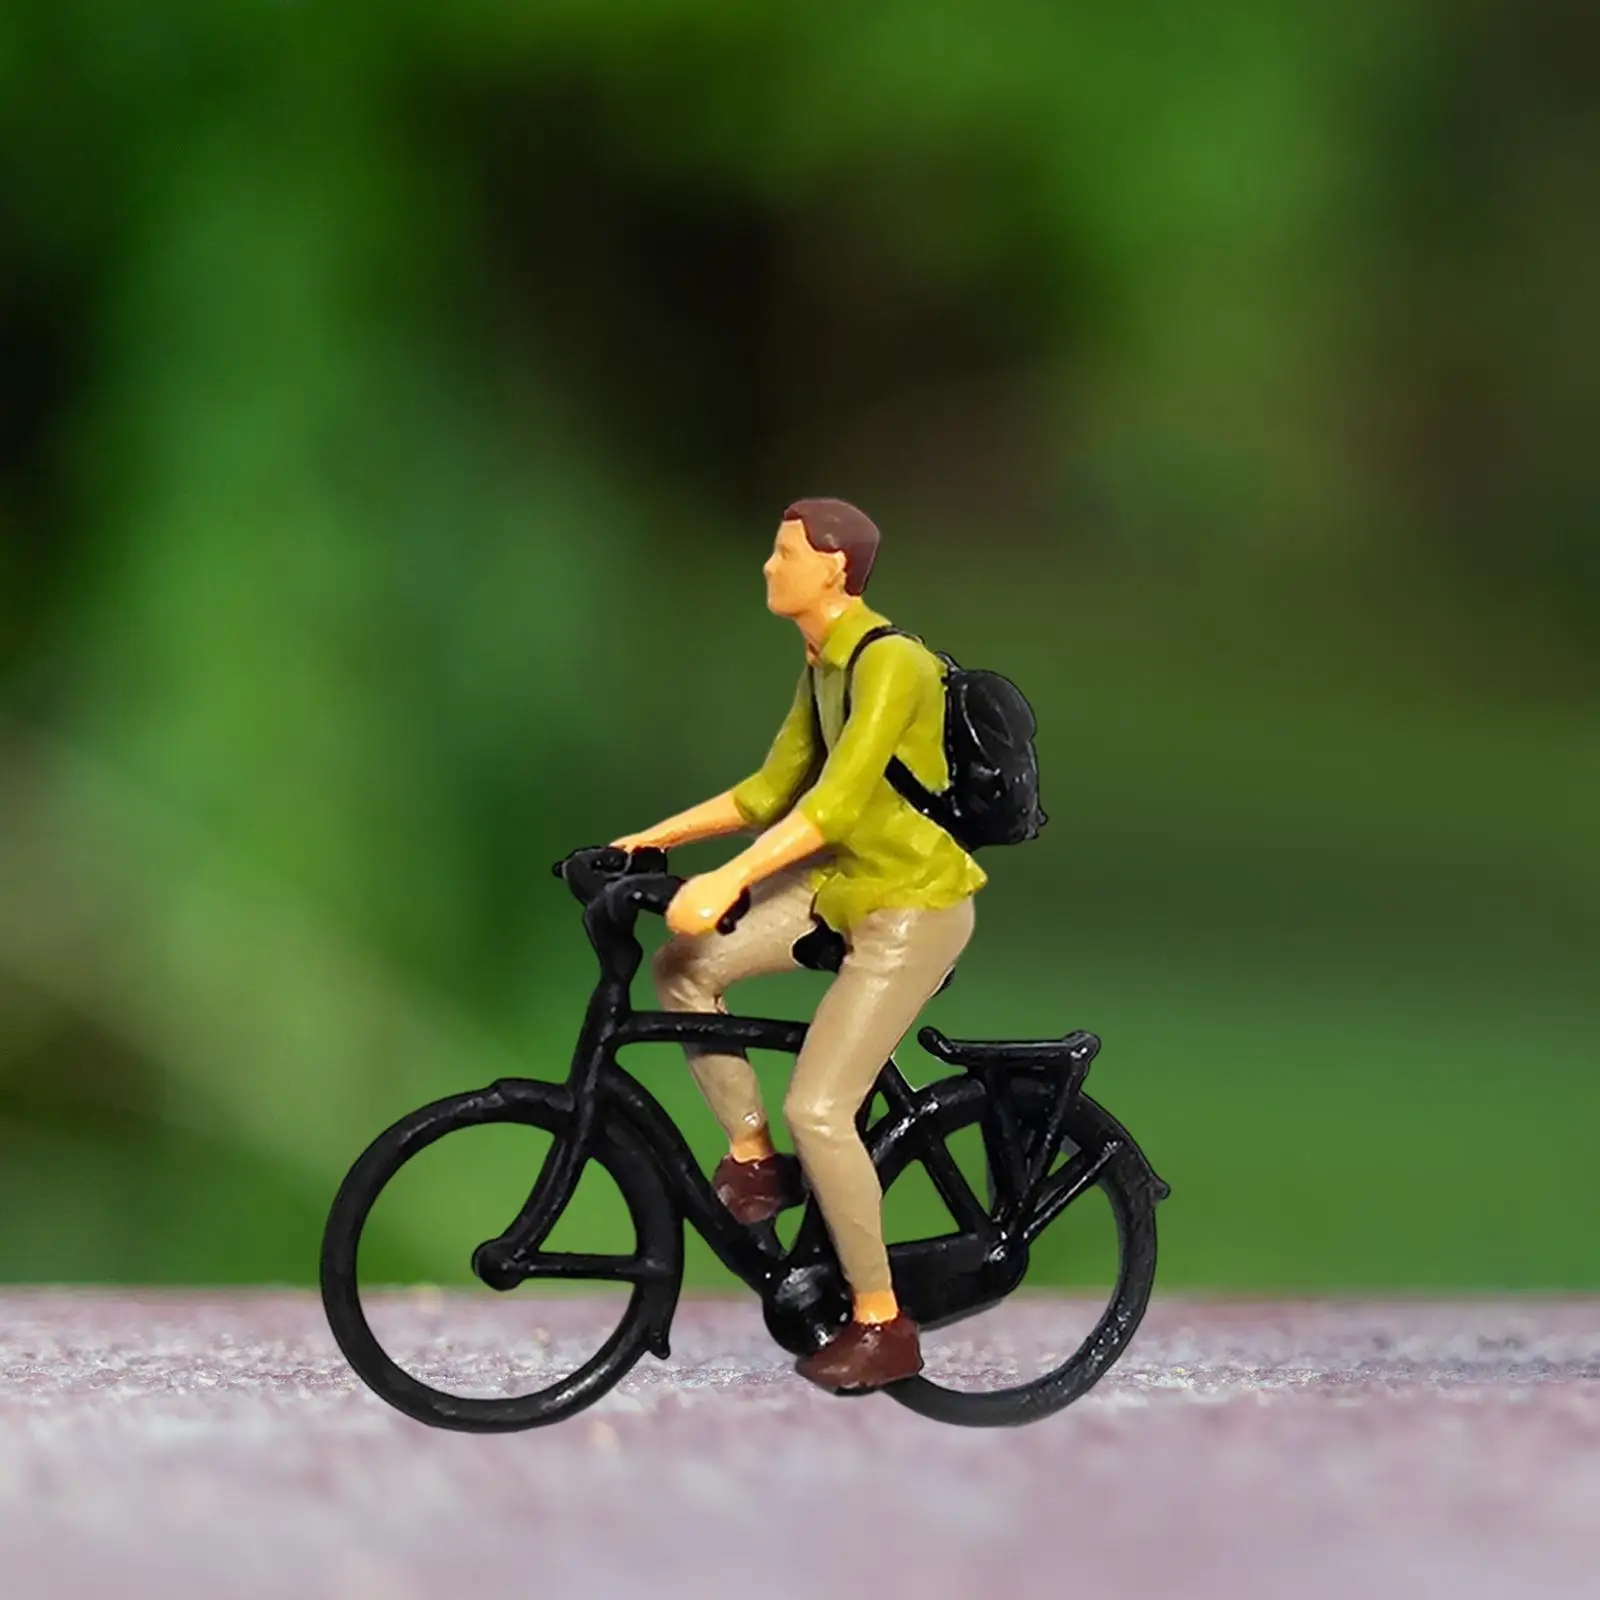 Realistic 1/87 Scale Cyclist Figurine for Sand Table Diorama Miniature Scene Layout Decor